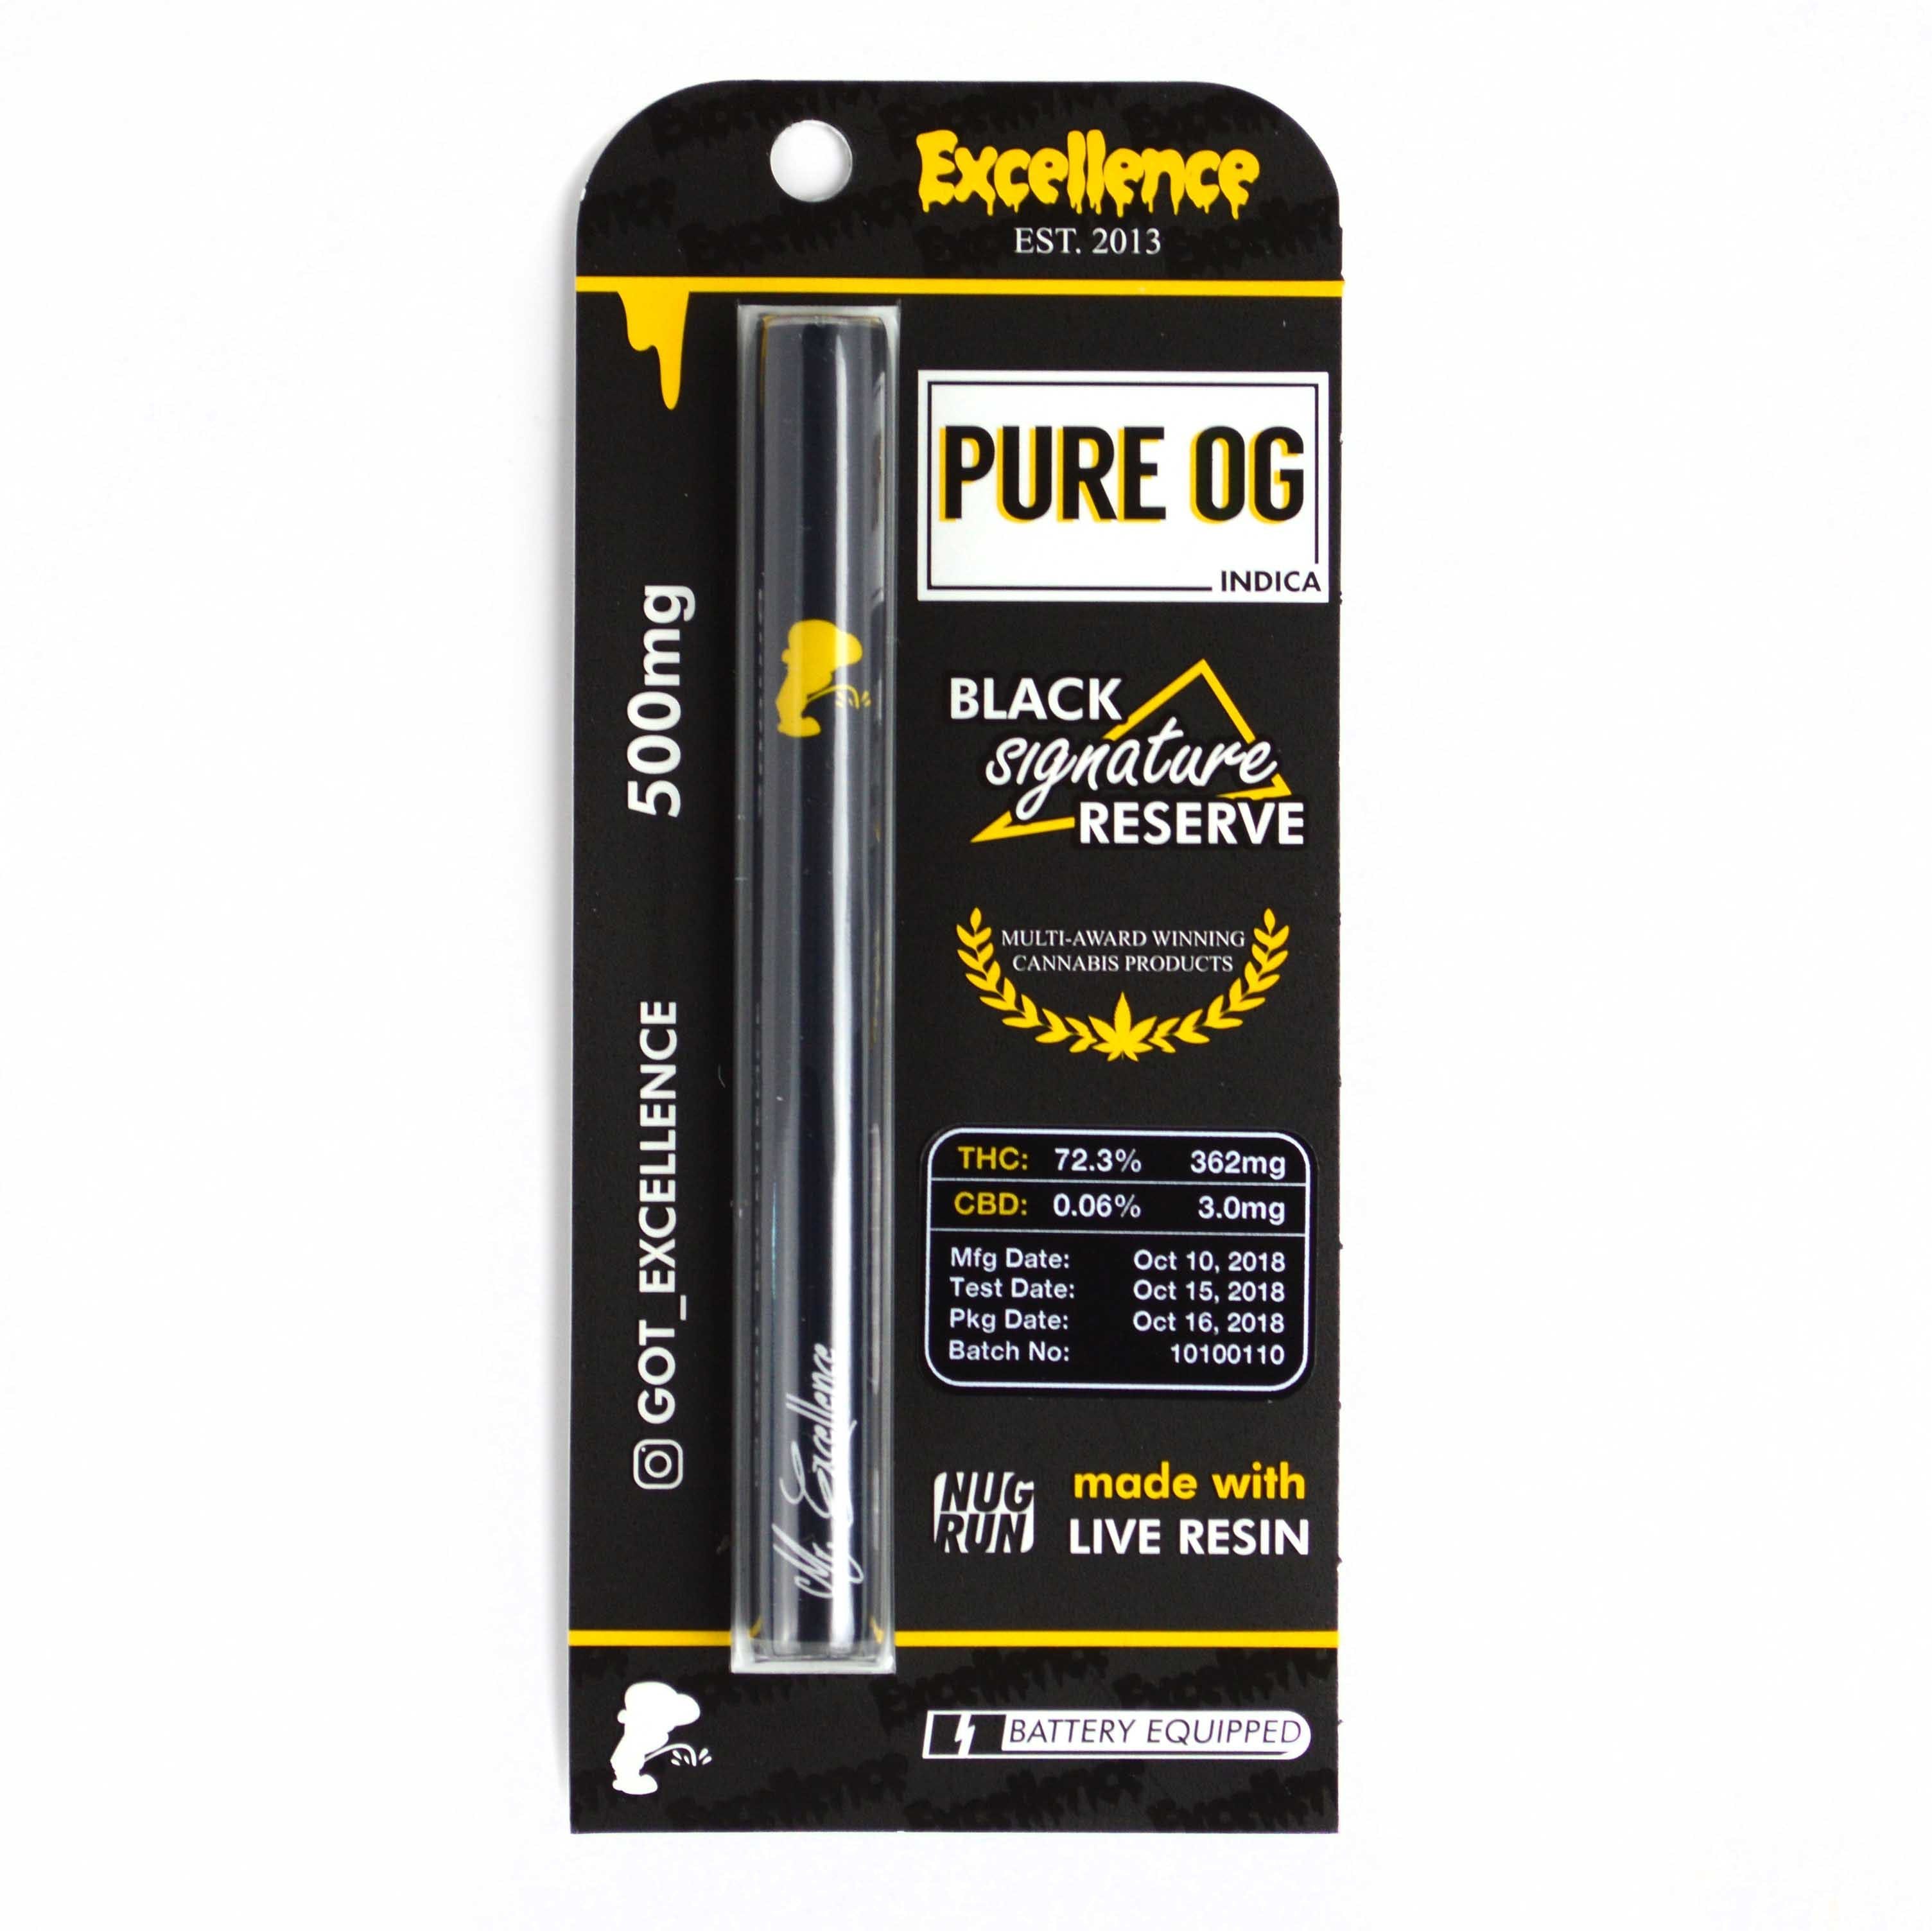 Pure OG - Black Signature Disposable